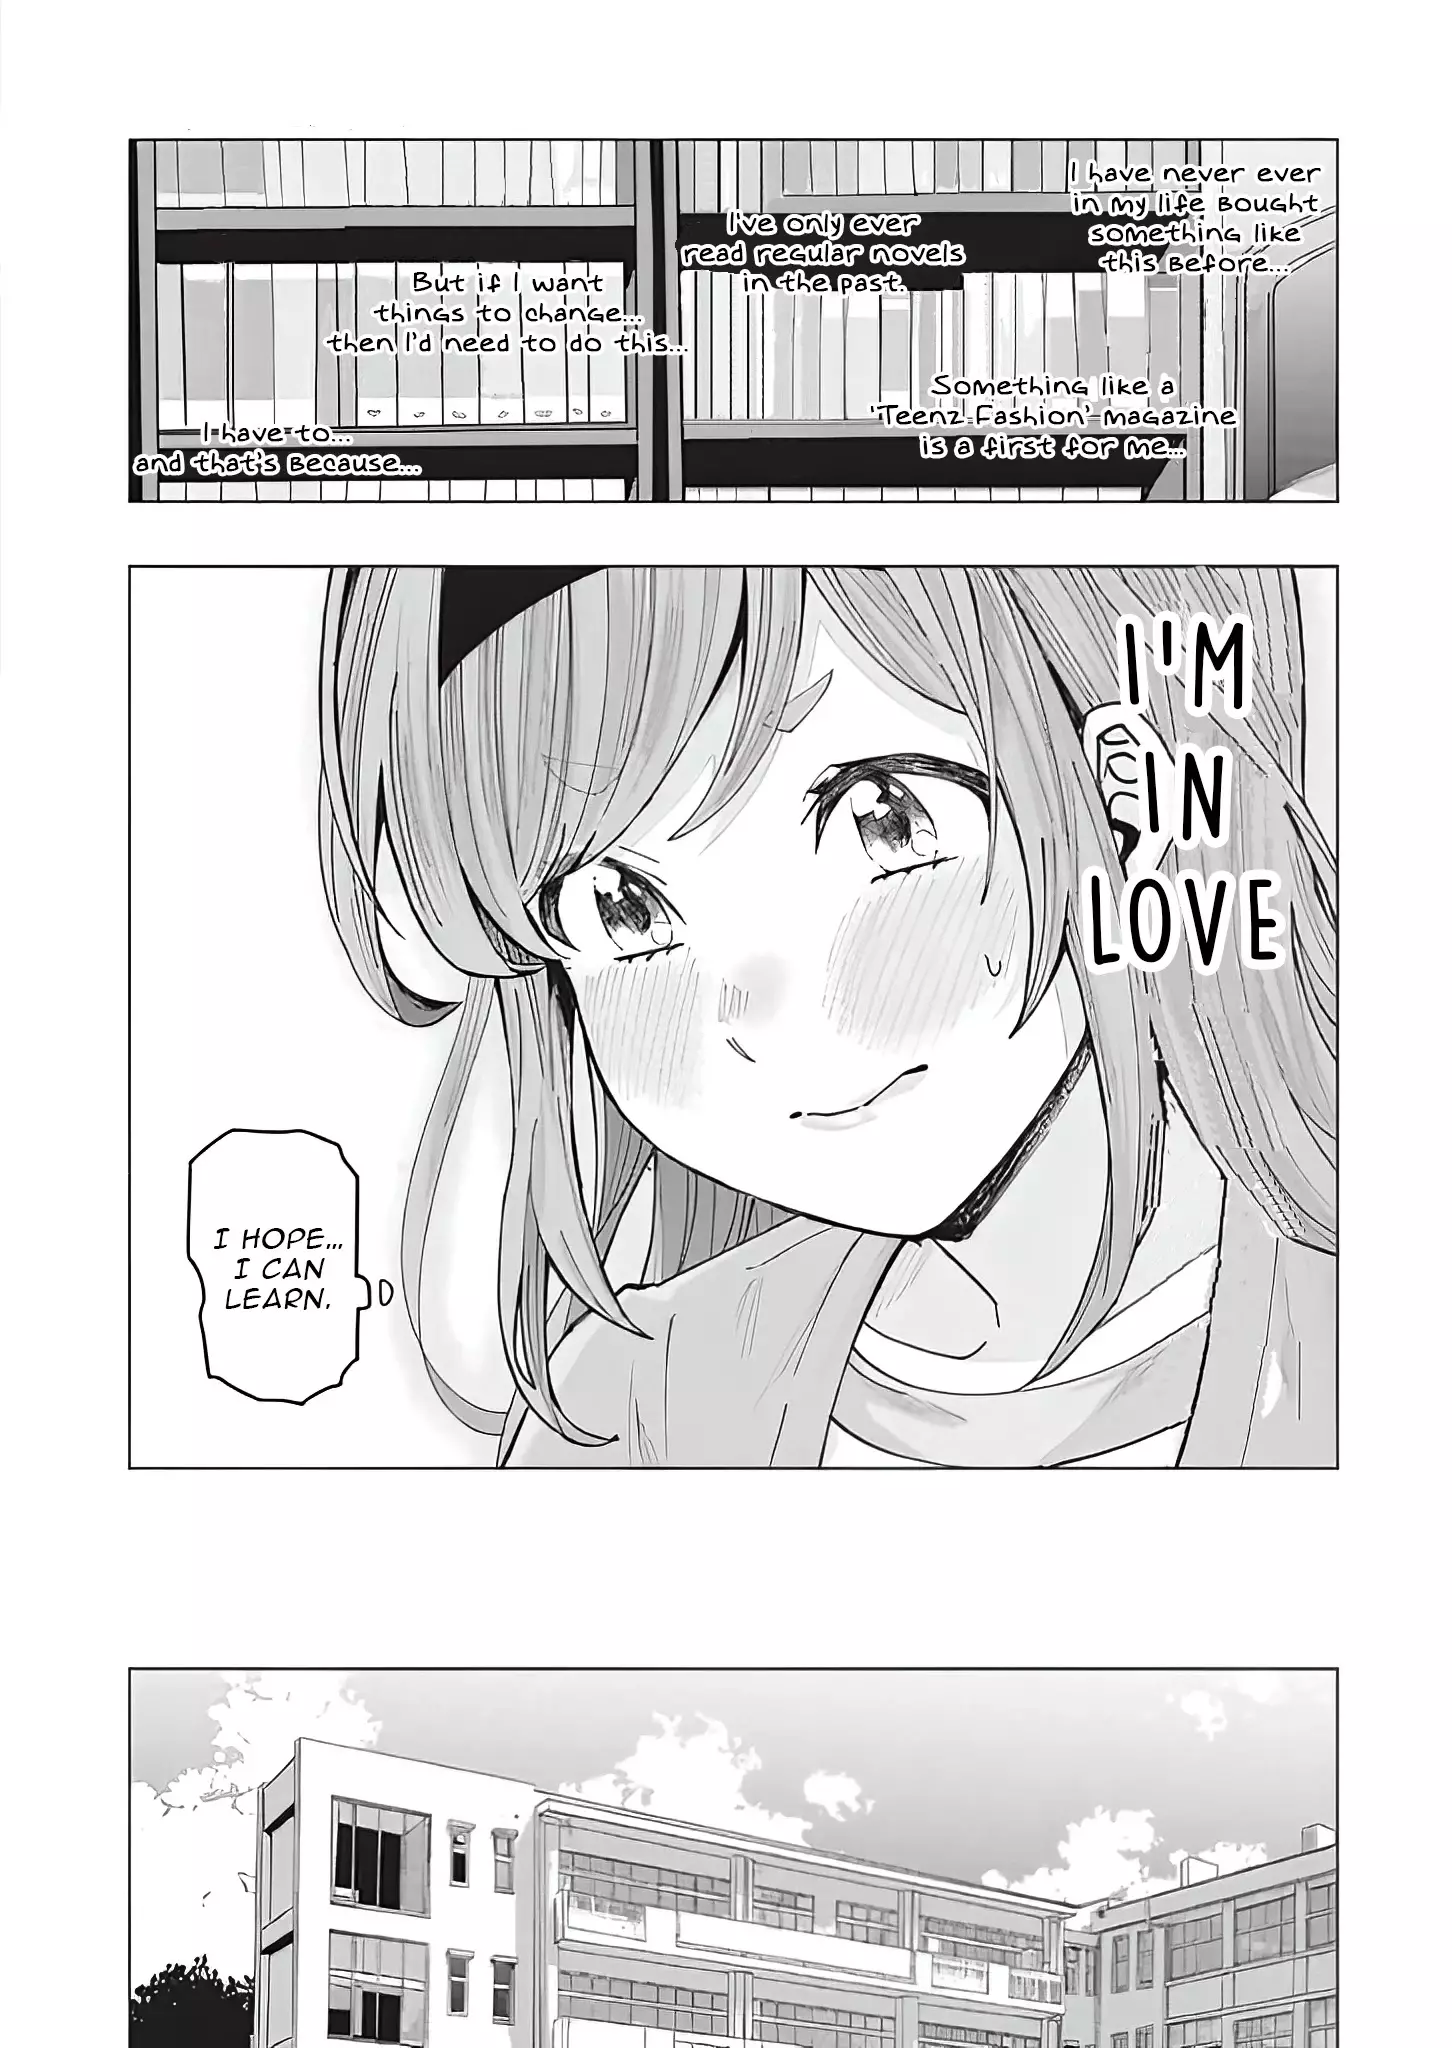 "nobukuni-San" Does She Like Me? - 1 page 5